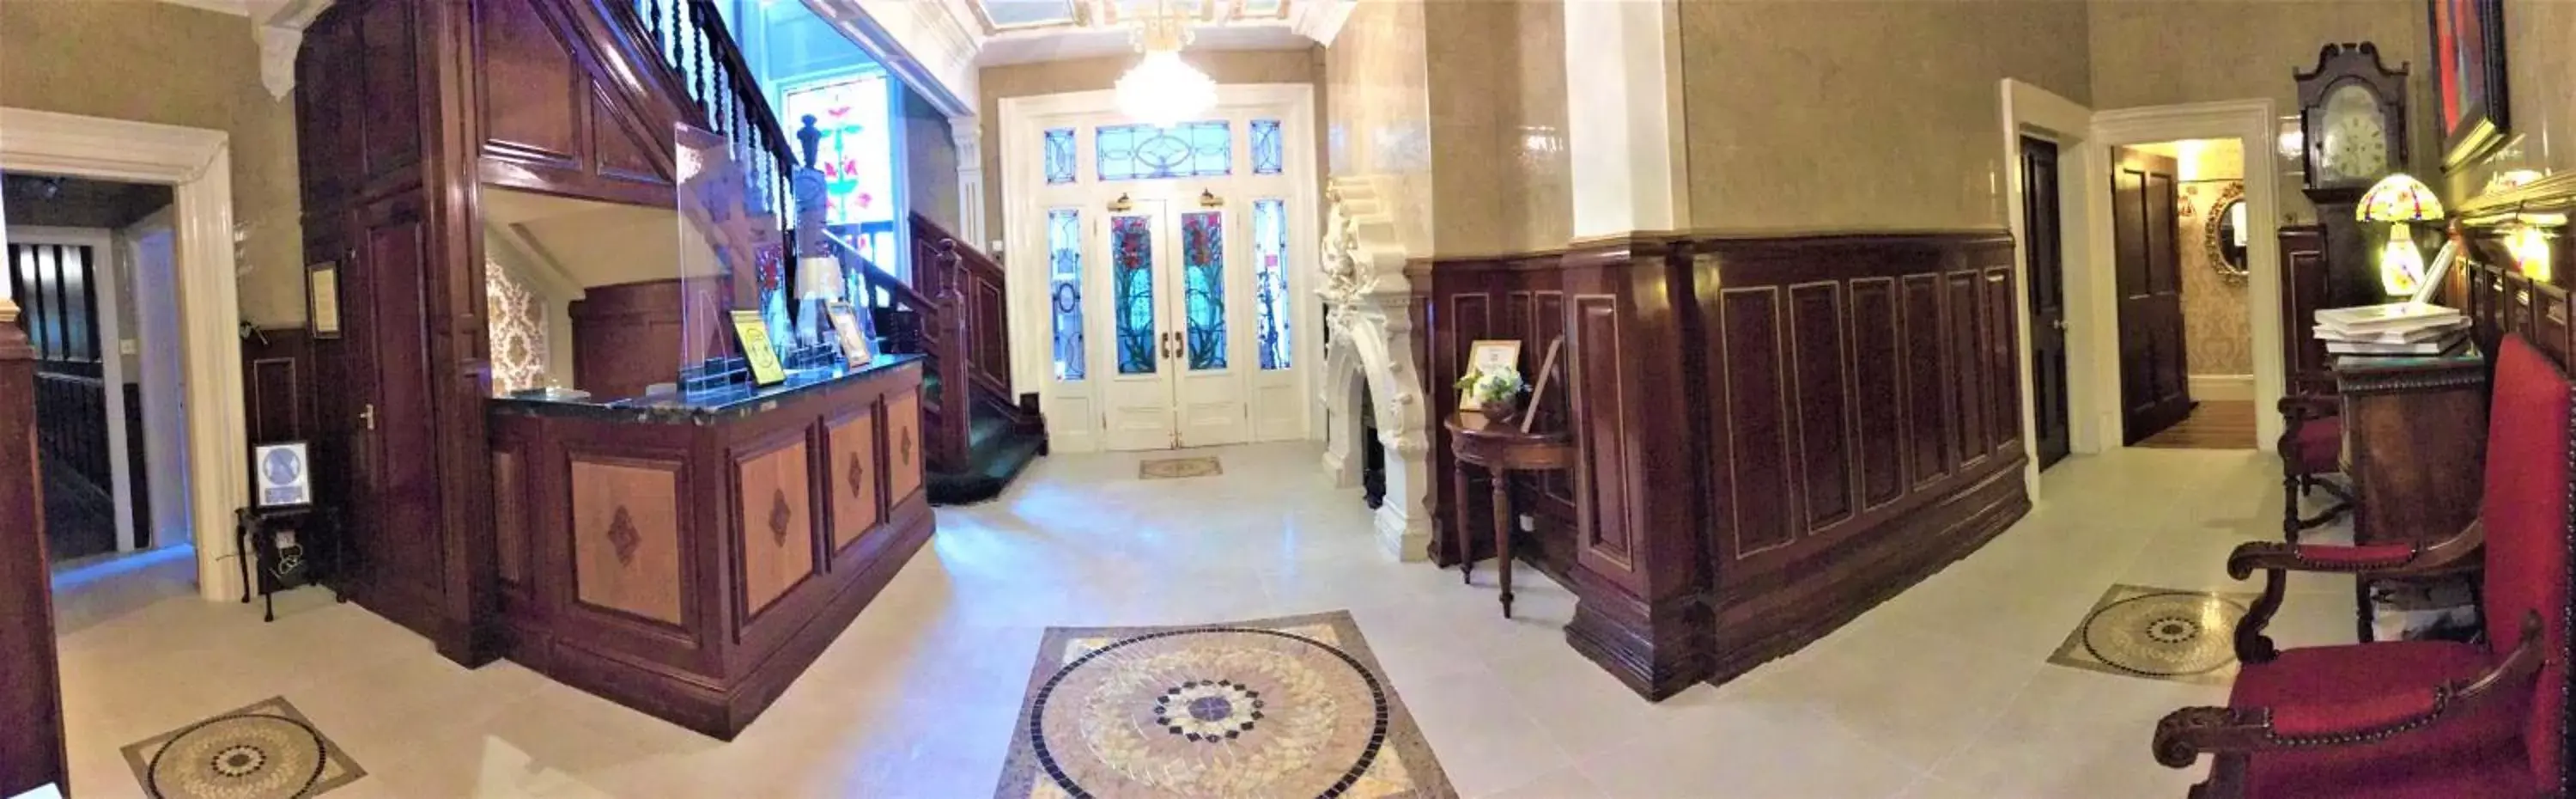 Lobby or reception in Astley Bank Hotel